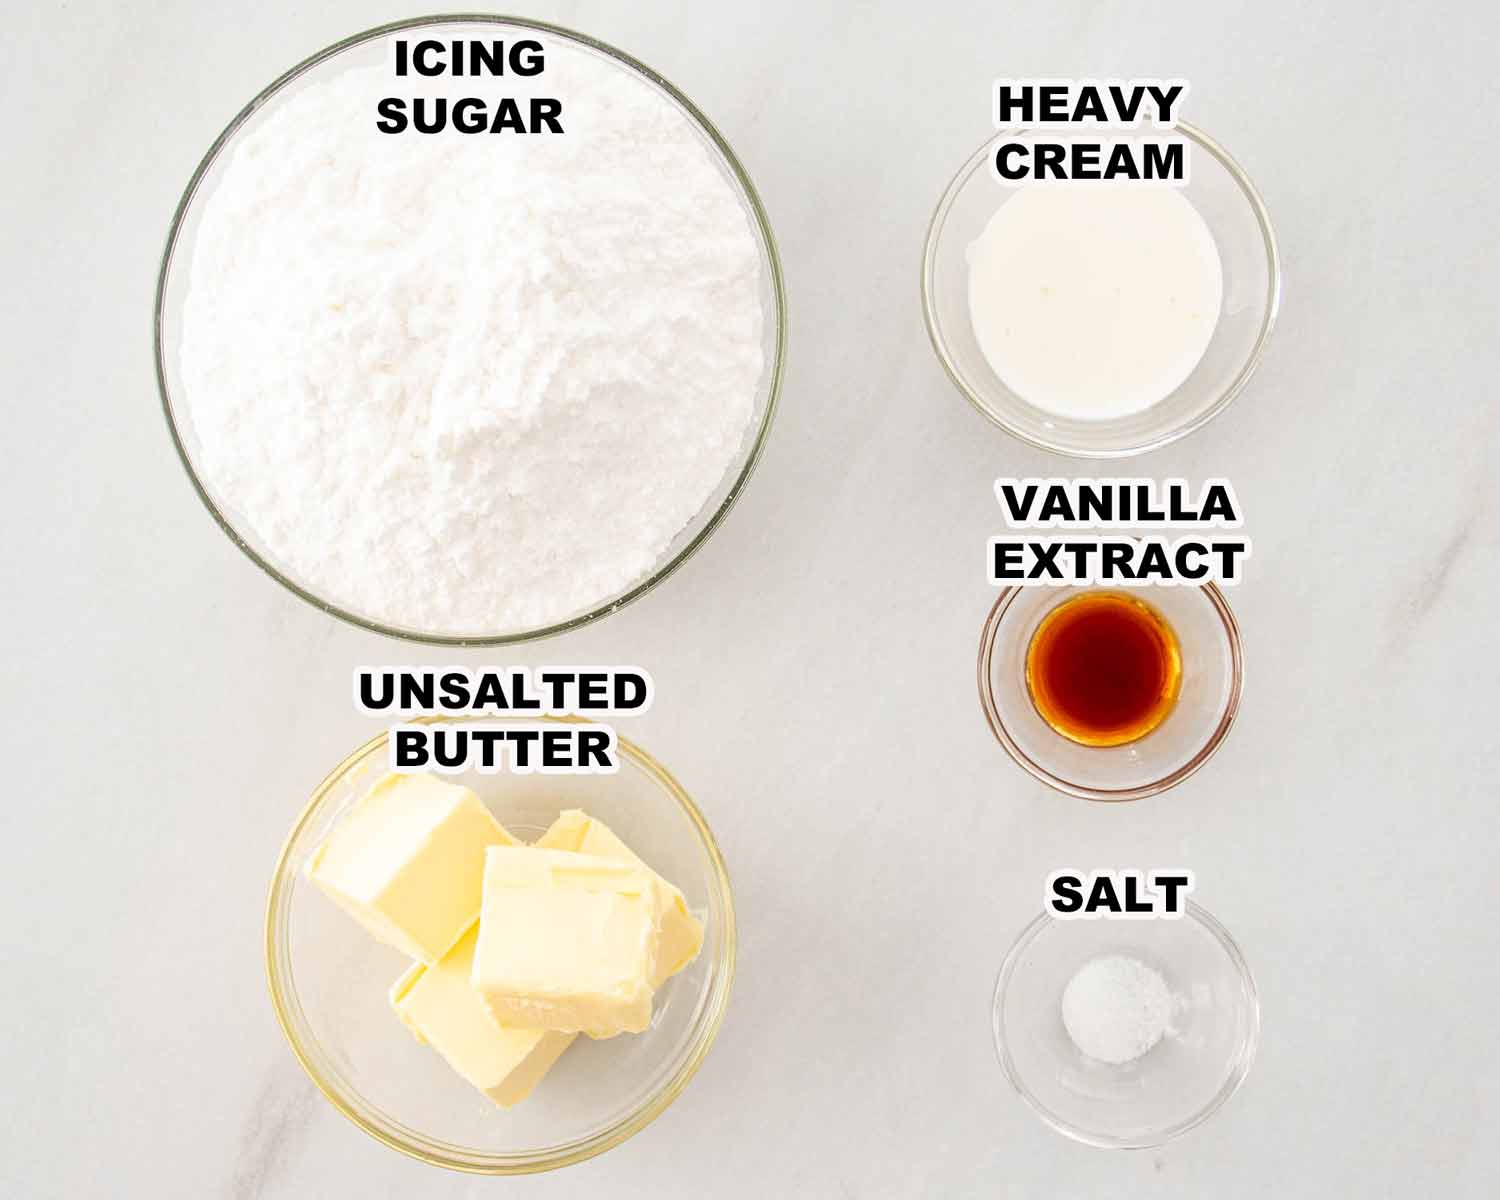 ingredients needed to make vanilla frosting.